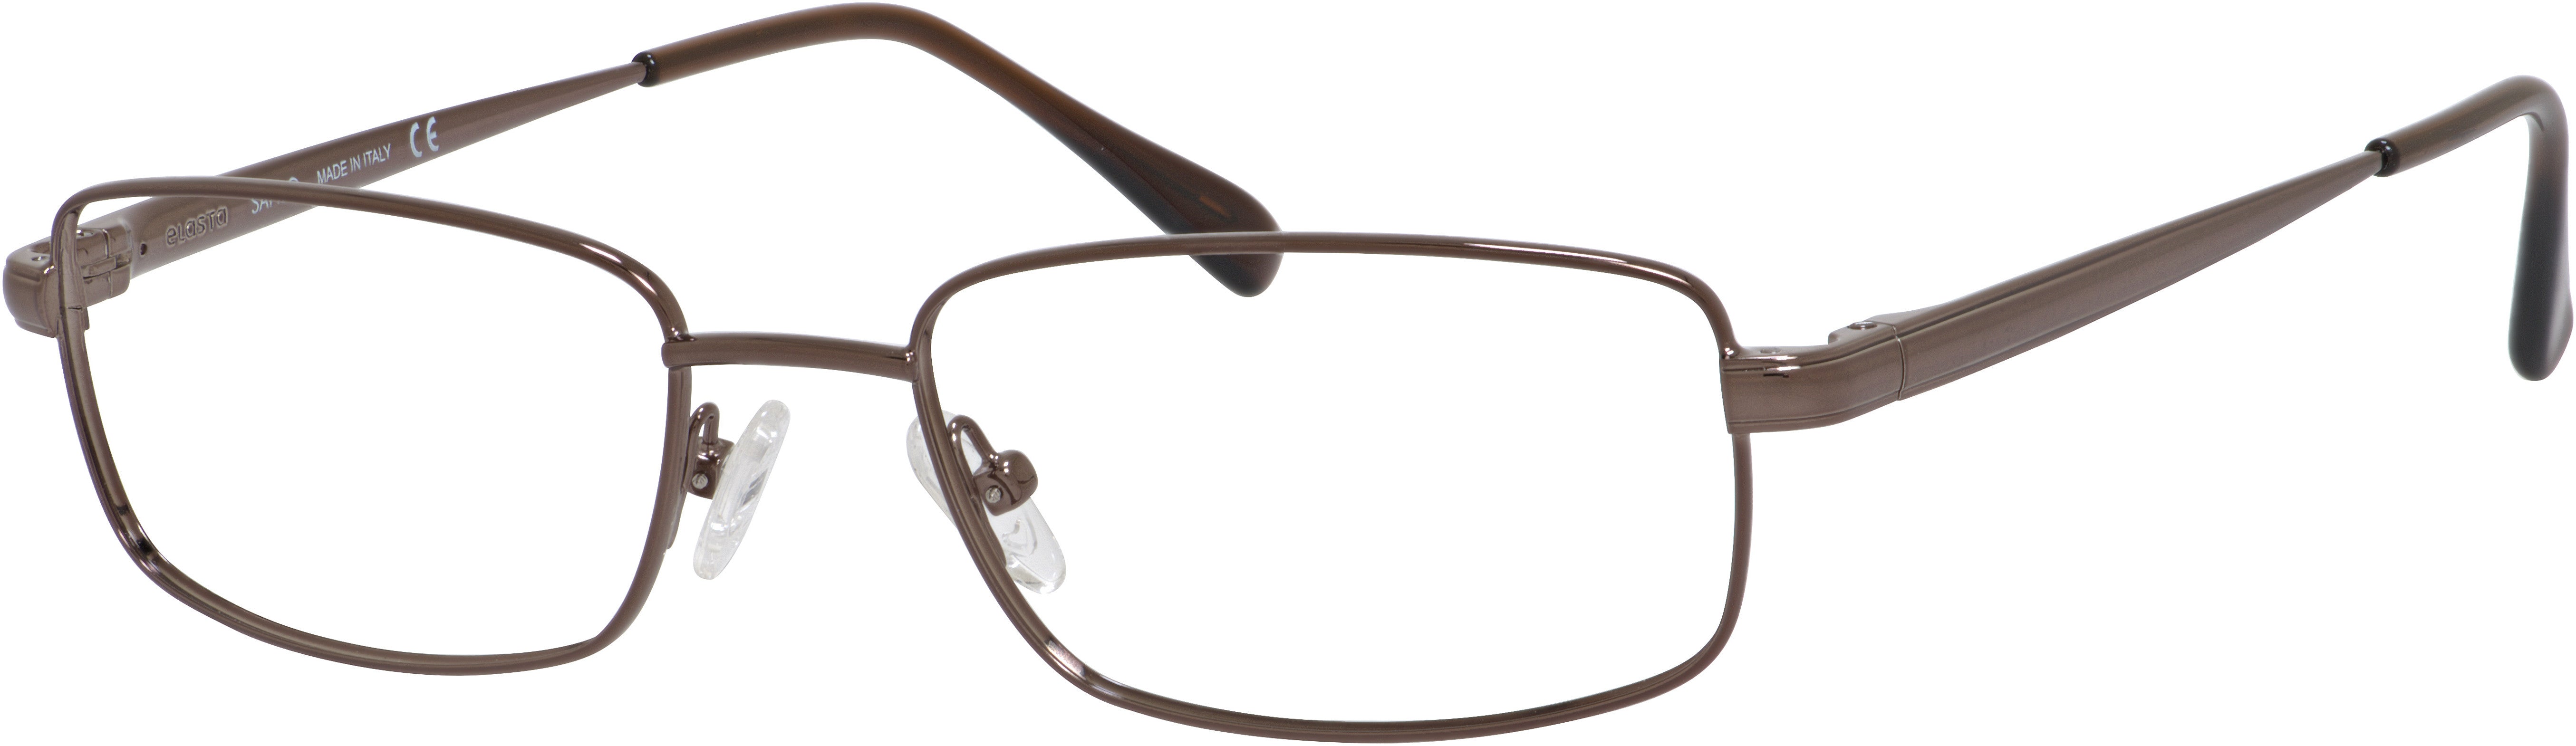  Elasta 7163 Rectangular Eyeglasses 01WK-01WK  Light Brown (00 Demo Lens)